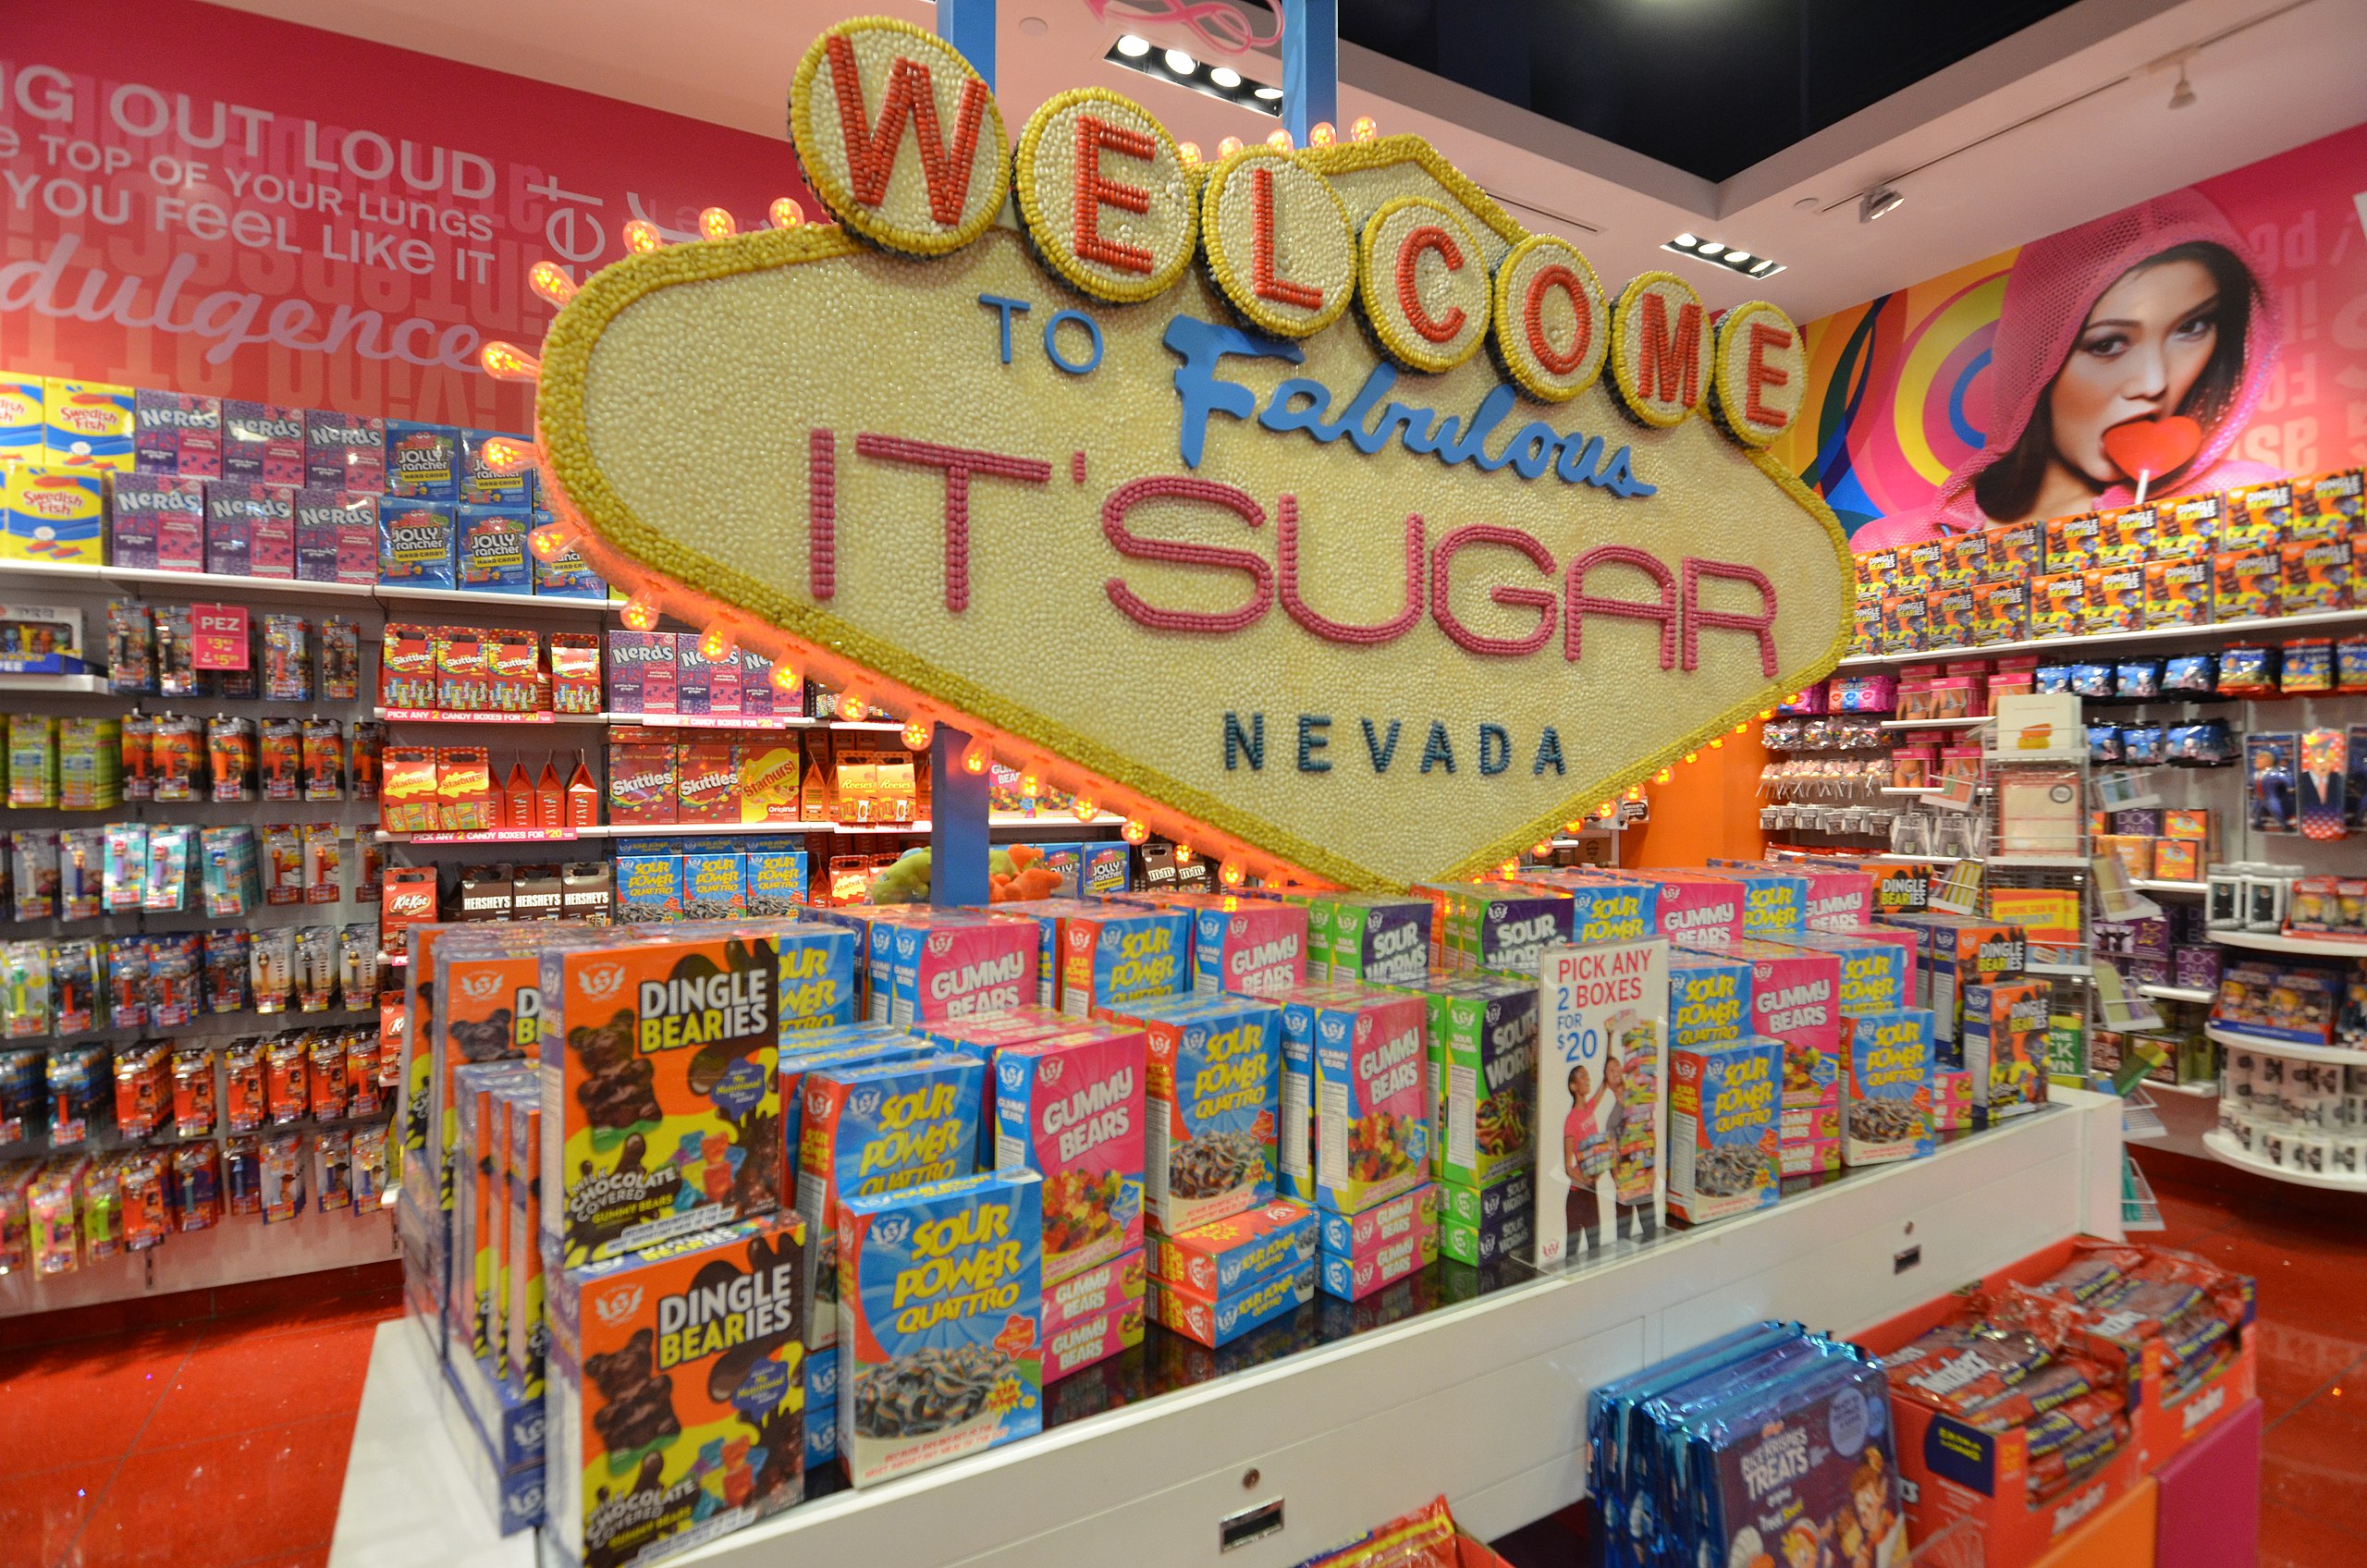 IT'SUGAR Opens Flagship Store on The Las Vegas Strip